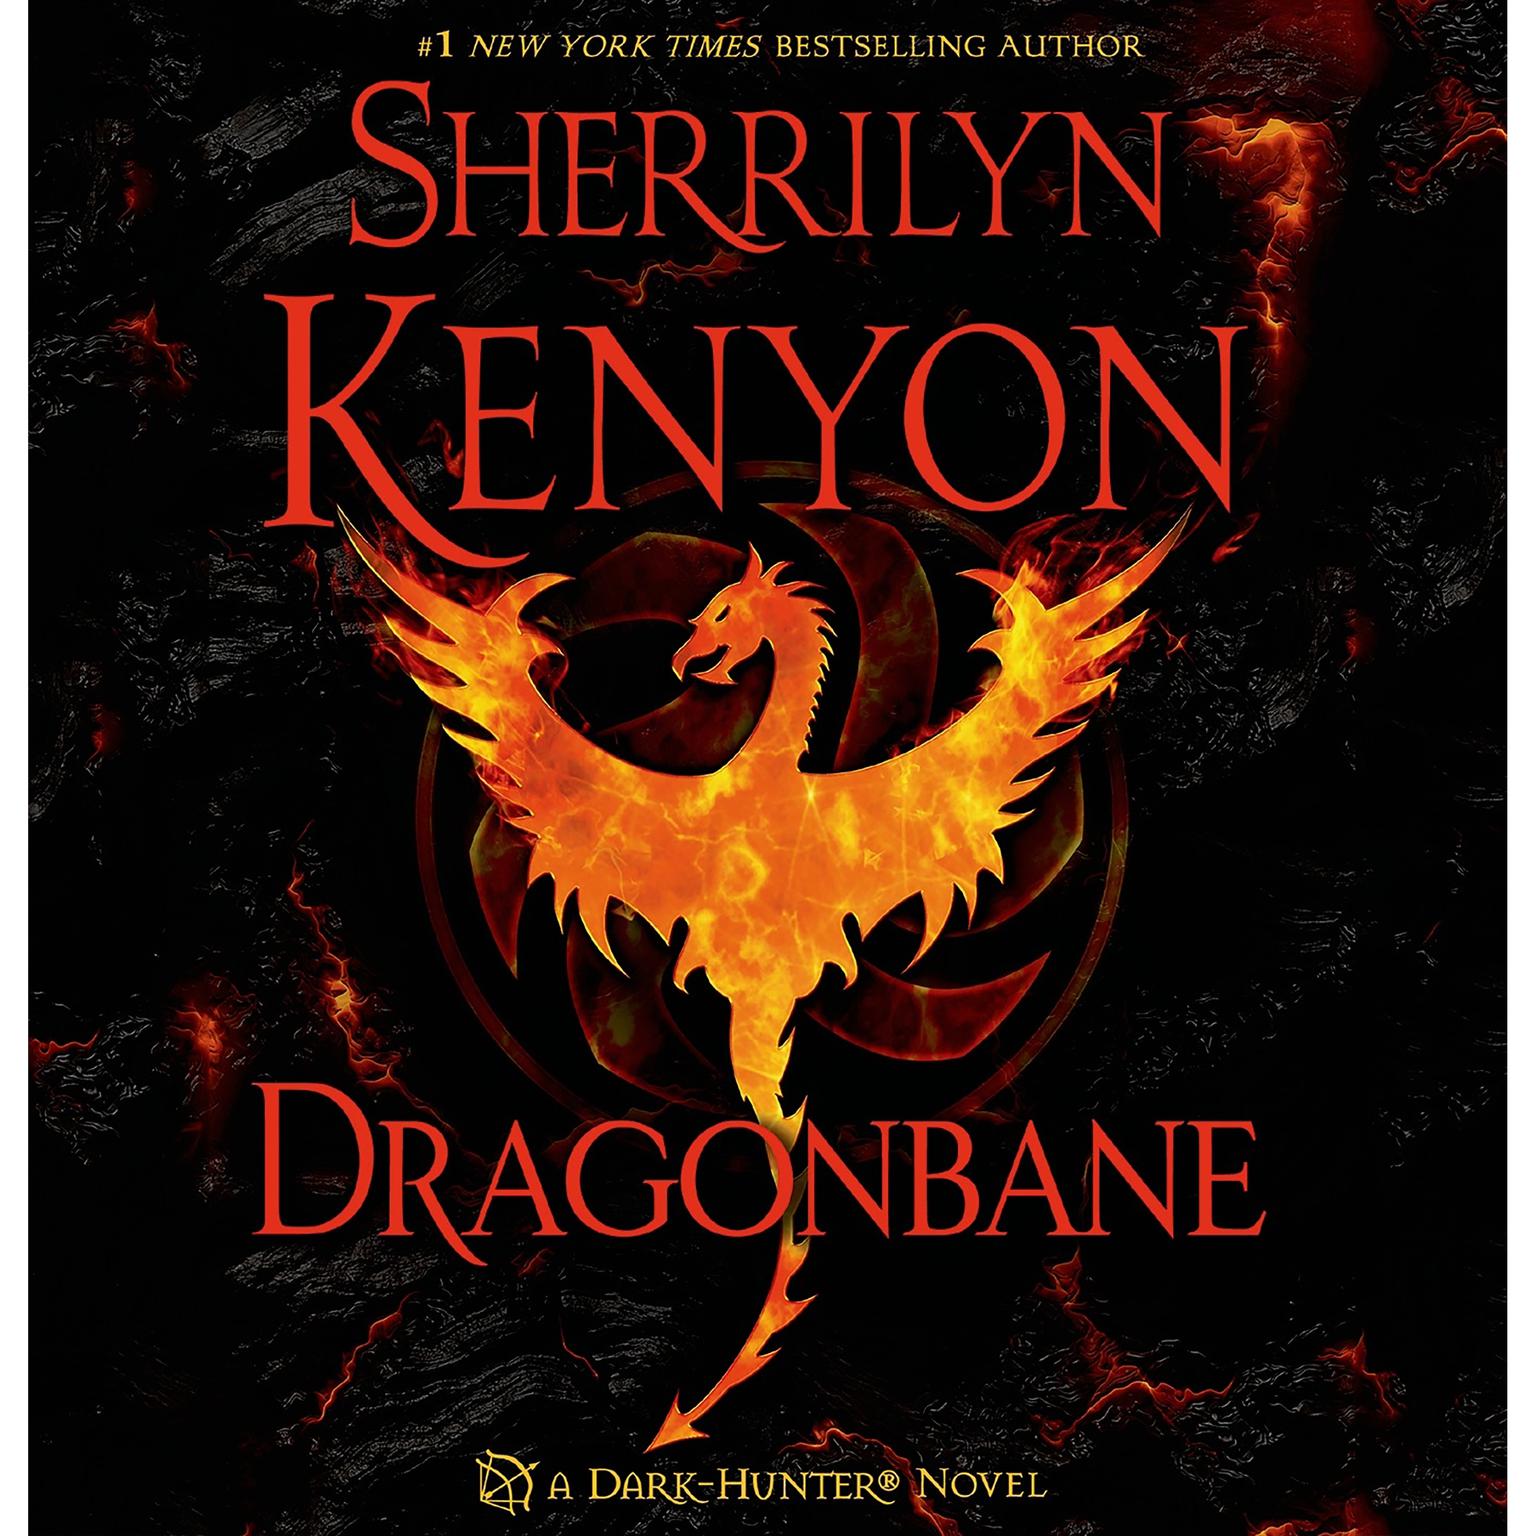 Dragonbane: A Dark-Hunter Novel Audiobook, by Sherrilyn Kenyon